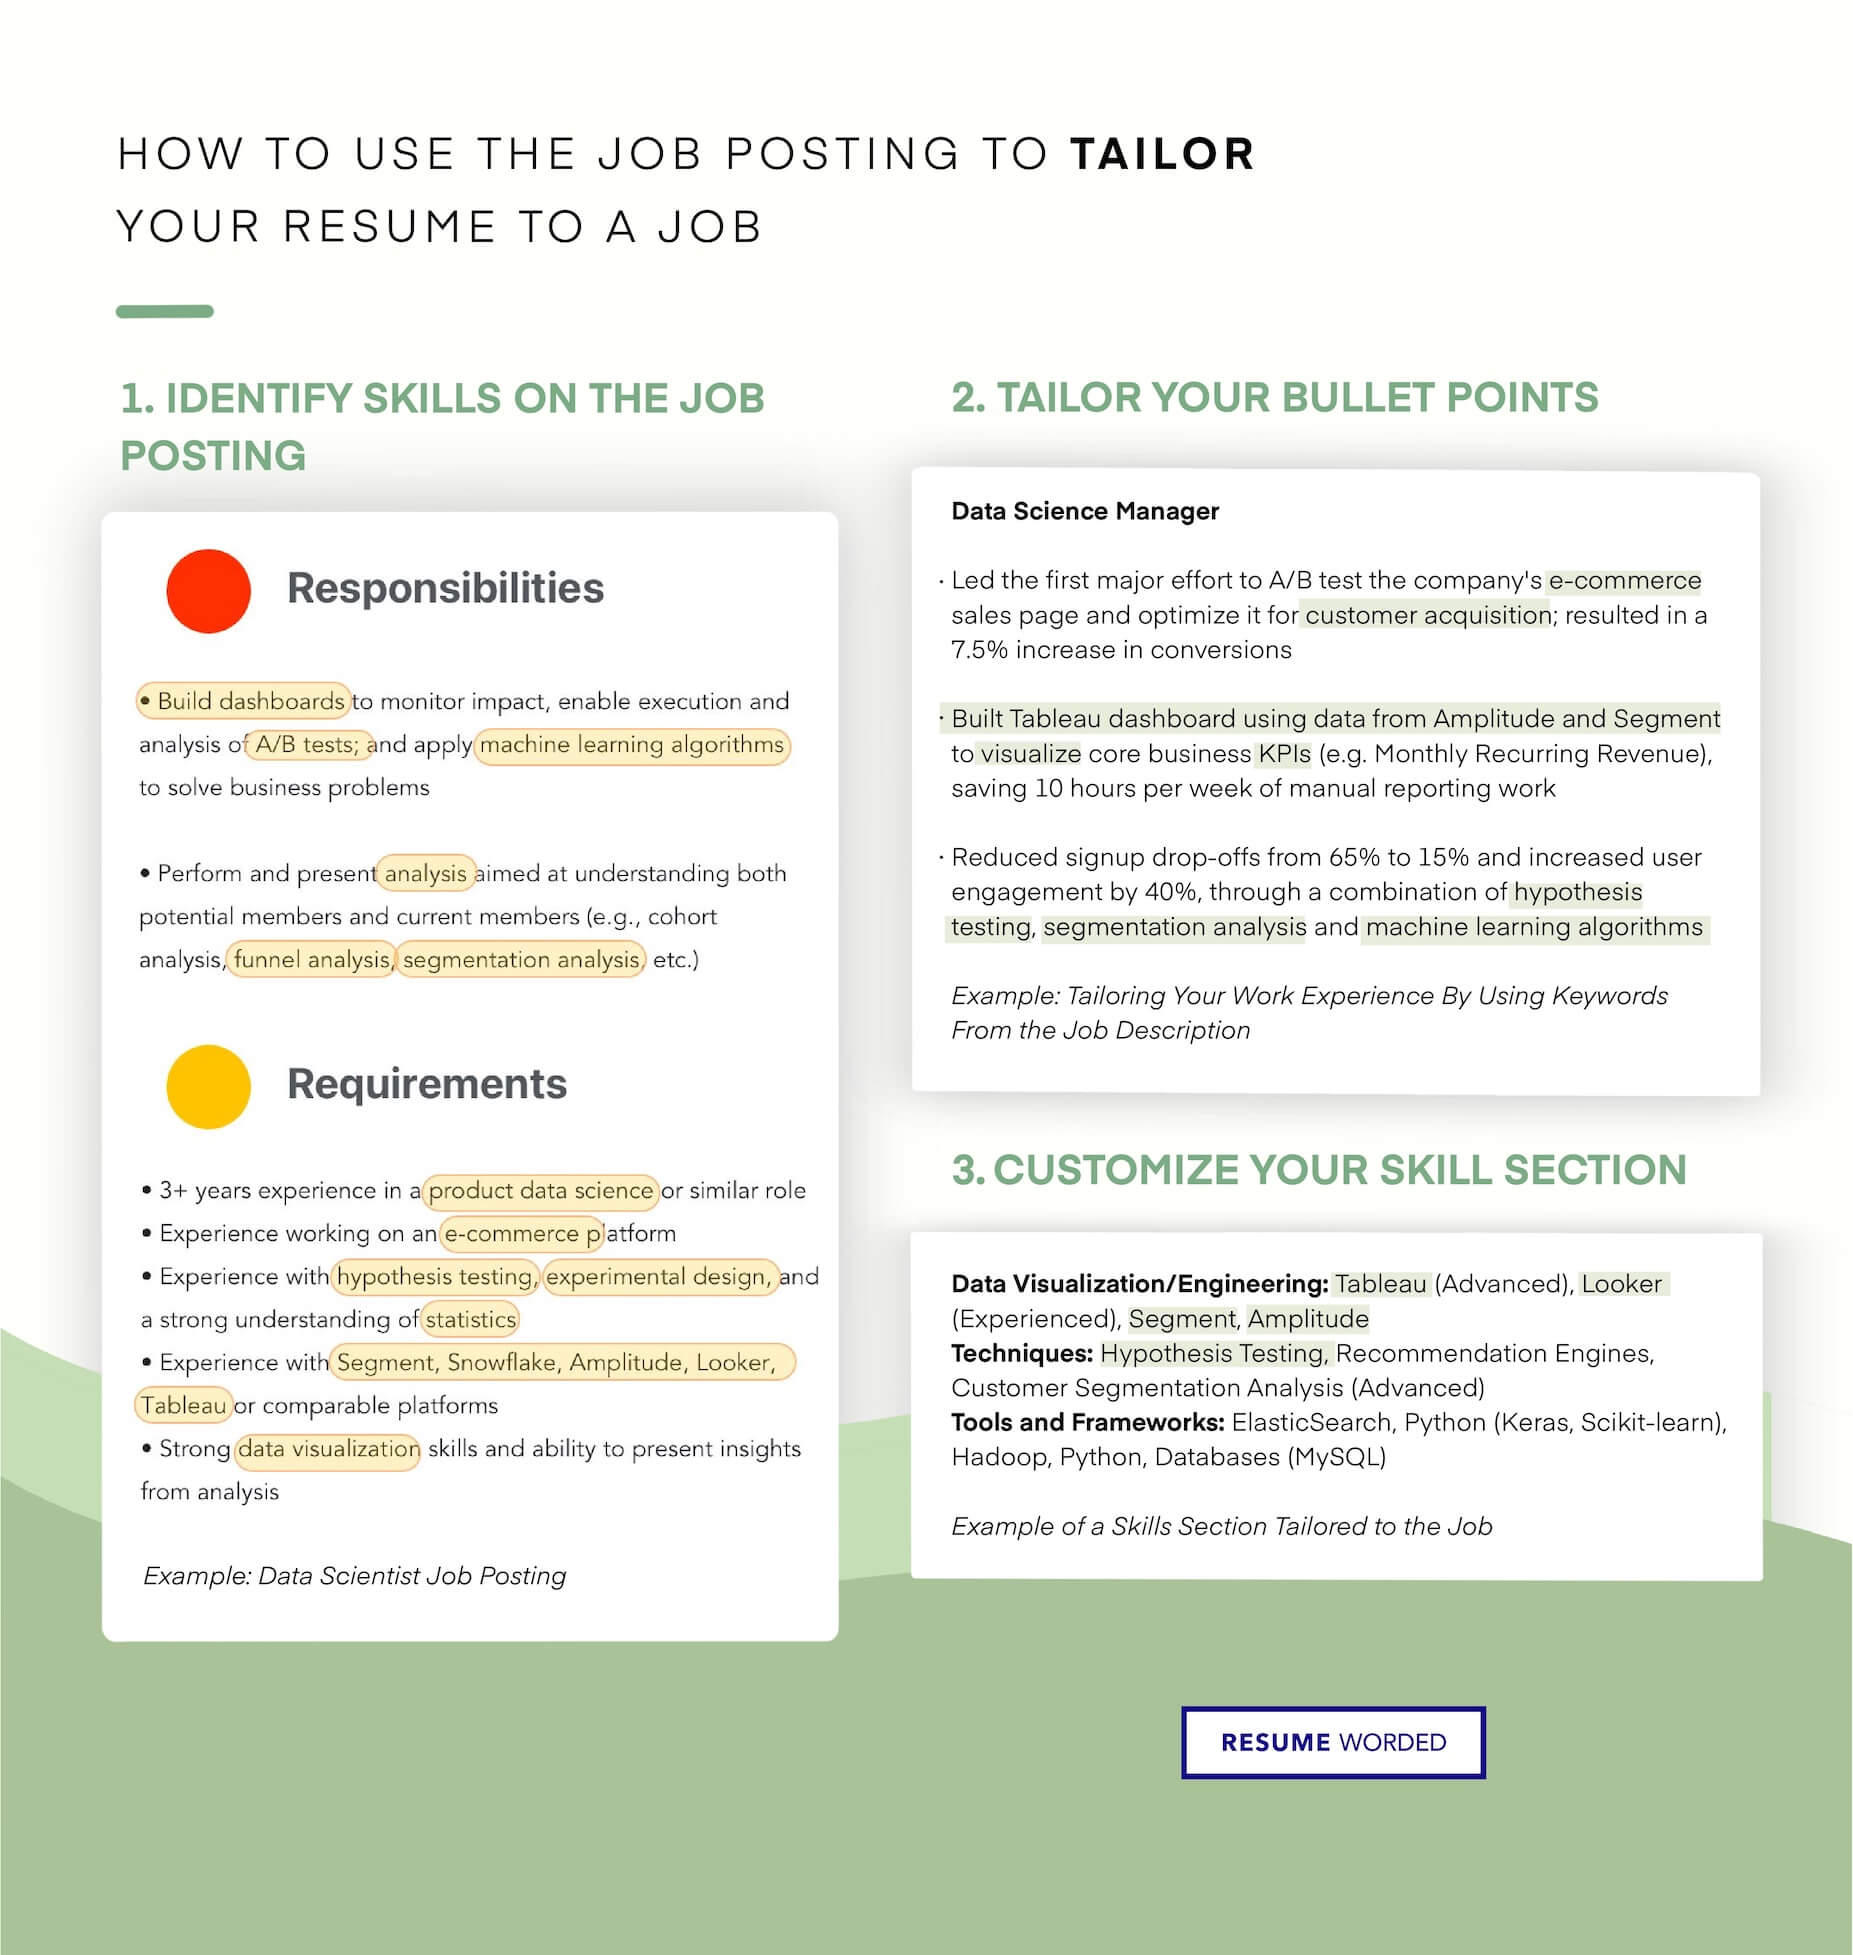 Tweak your resume depending on the potential job. - Auditor Resume